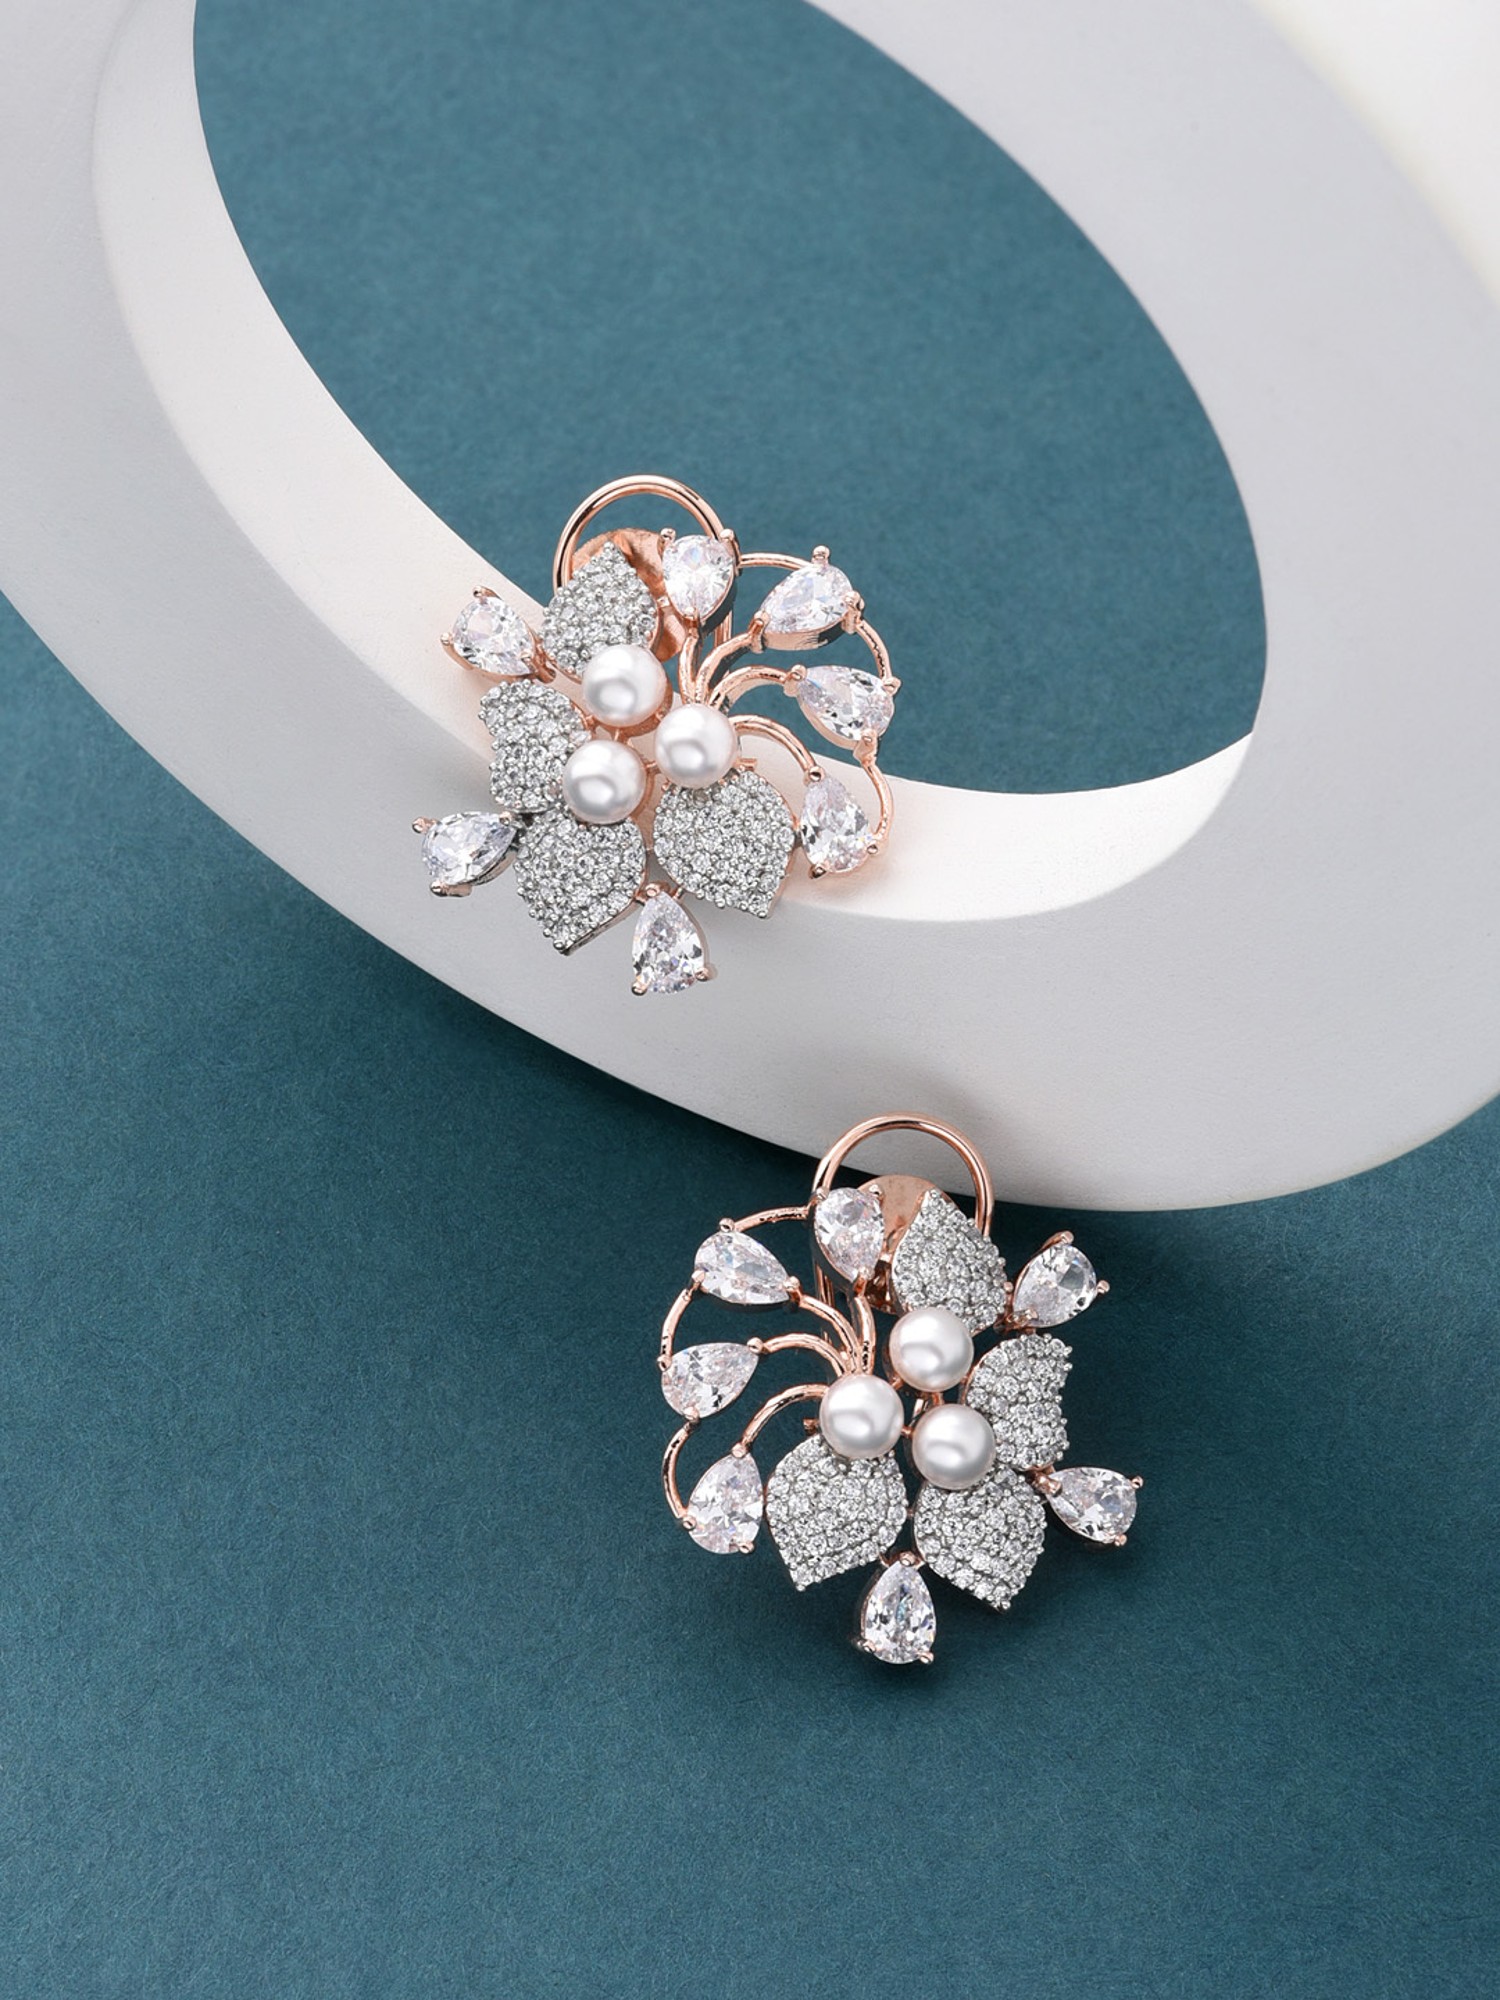 How to Buy Diamond Stud Earrings – 11 Things to Consider